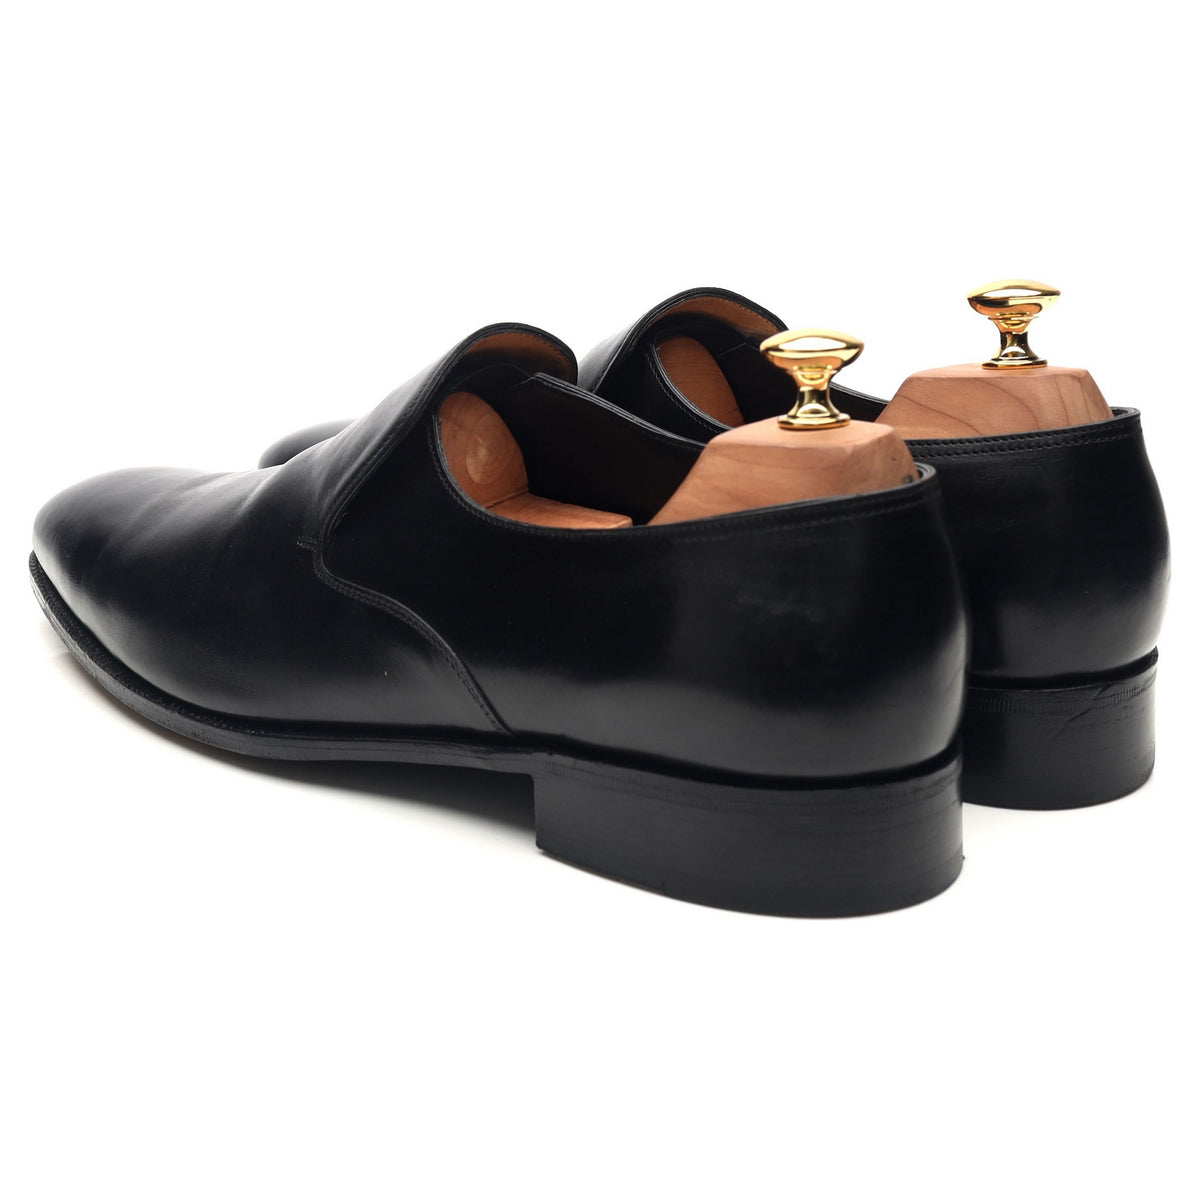 Prestige 'Elm' Black Leather UK 10.5 E - Abbot's Shoes